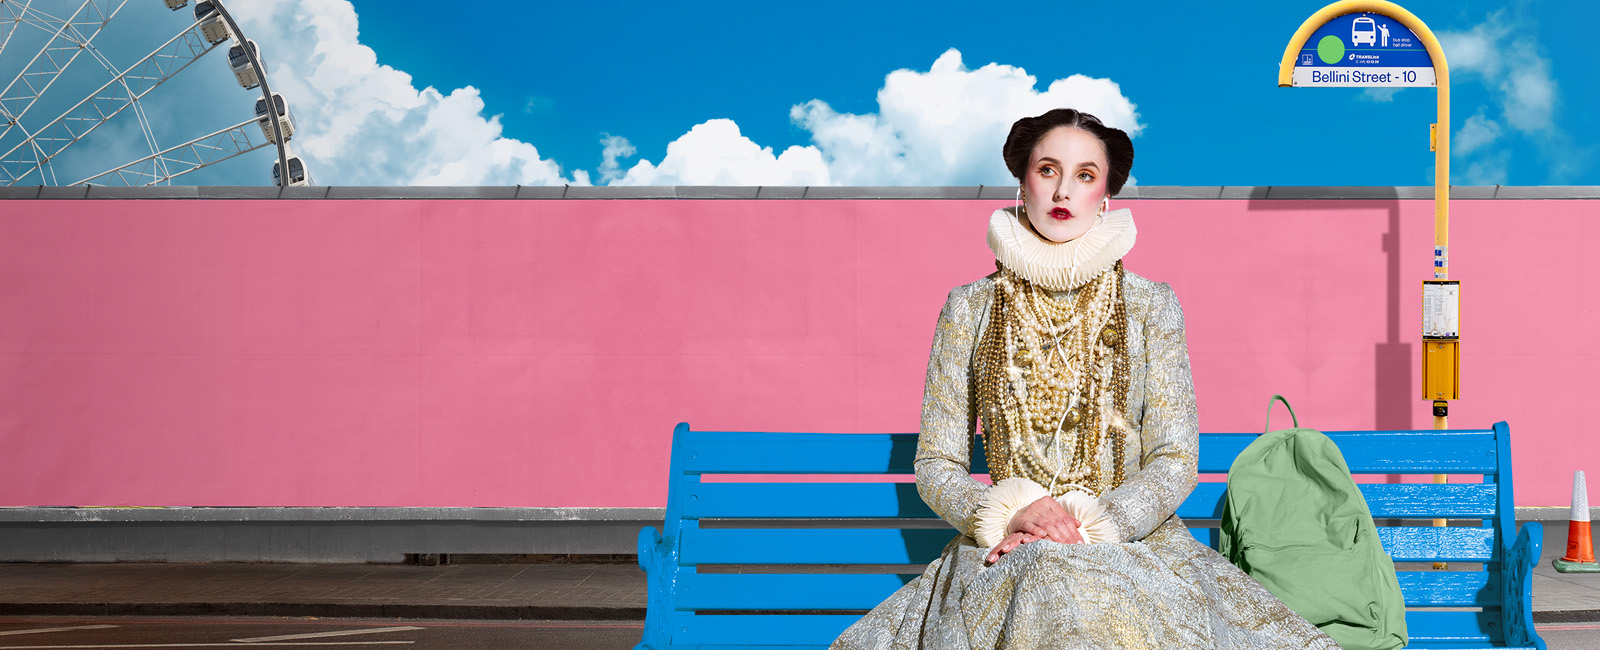 Lady in opera attire sitting on a blue bench